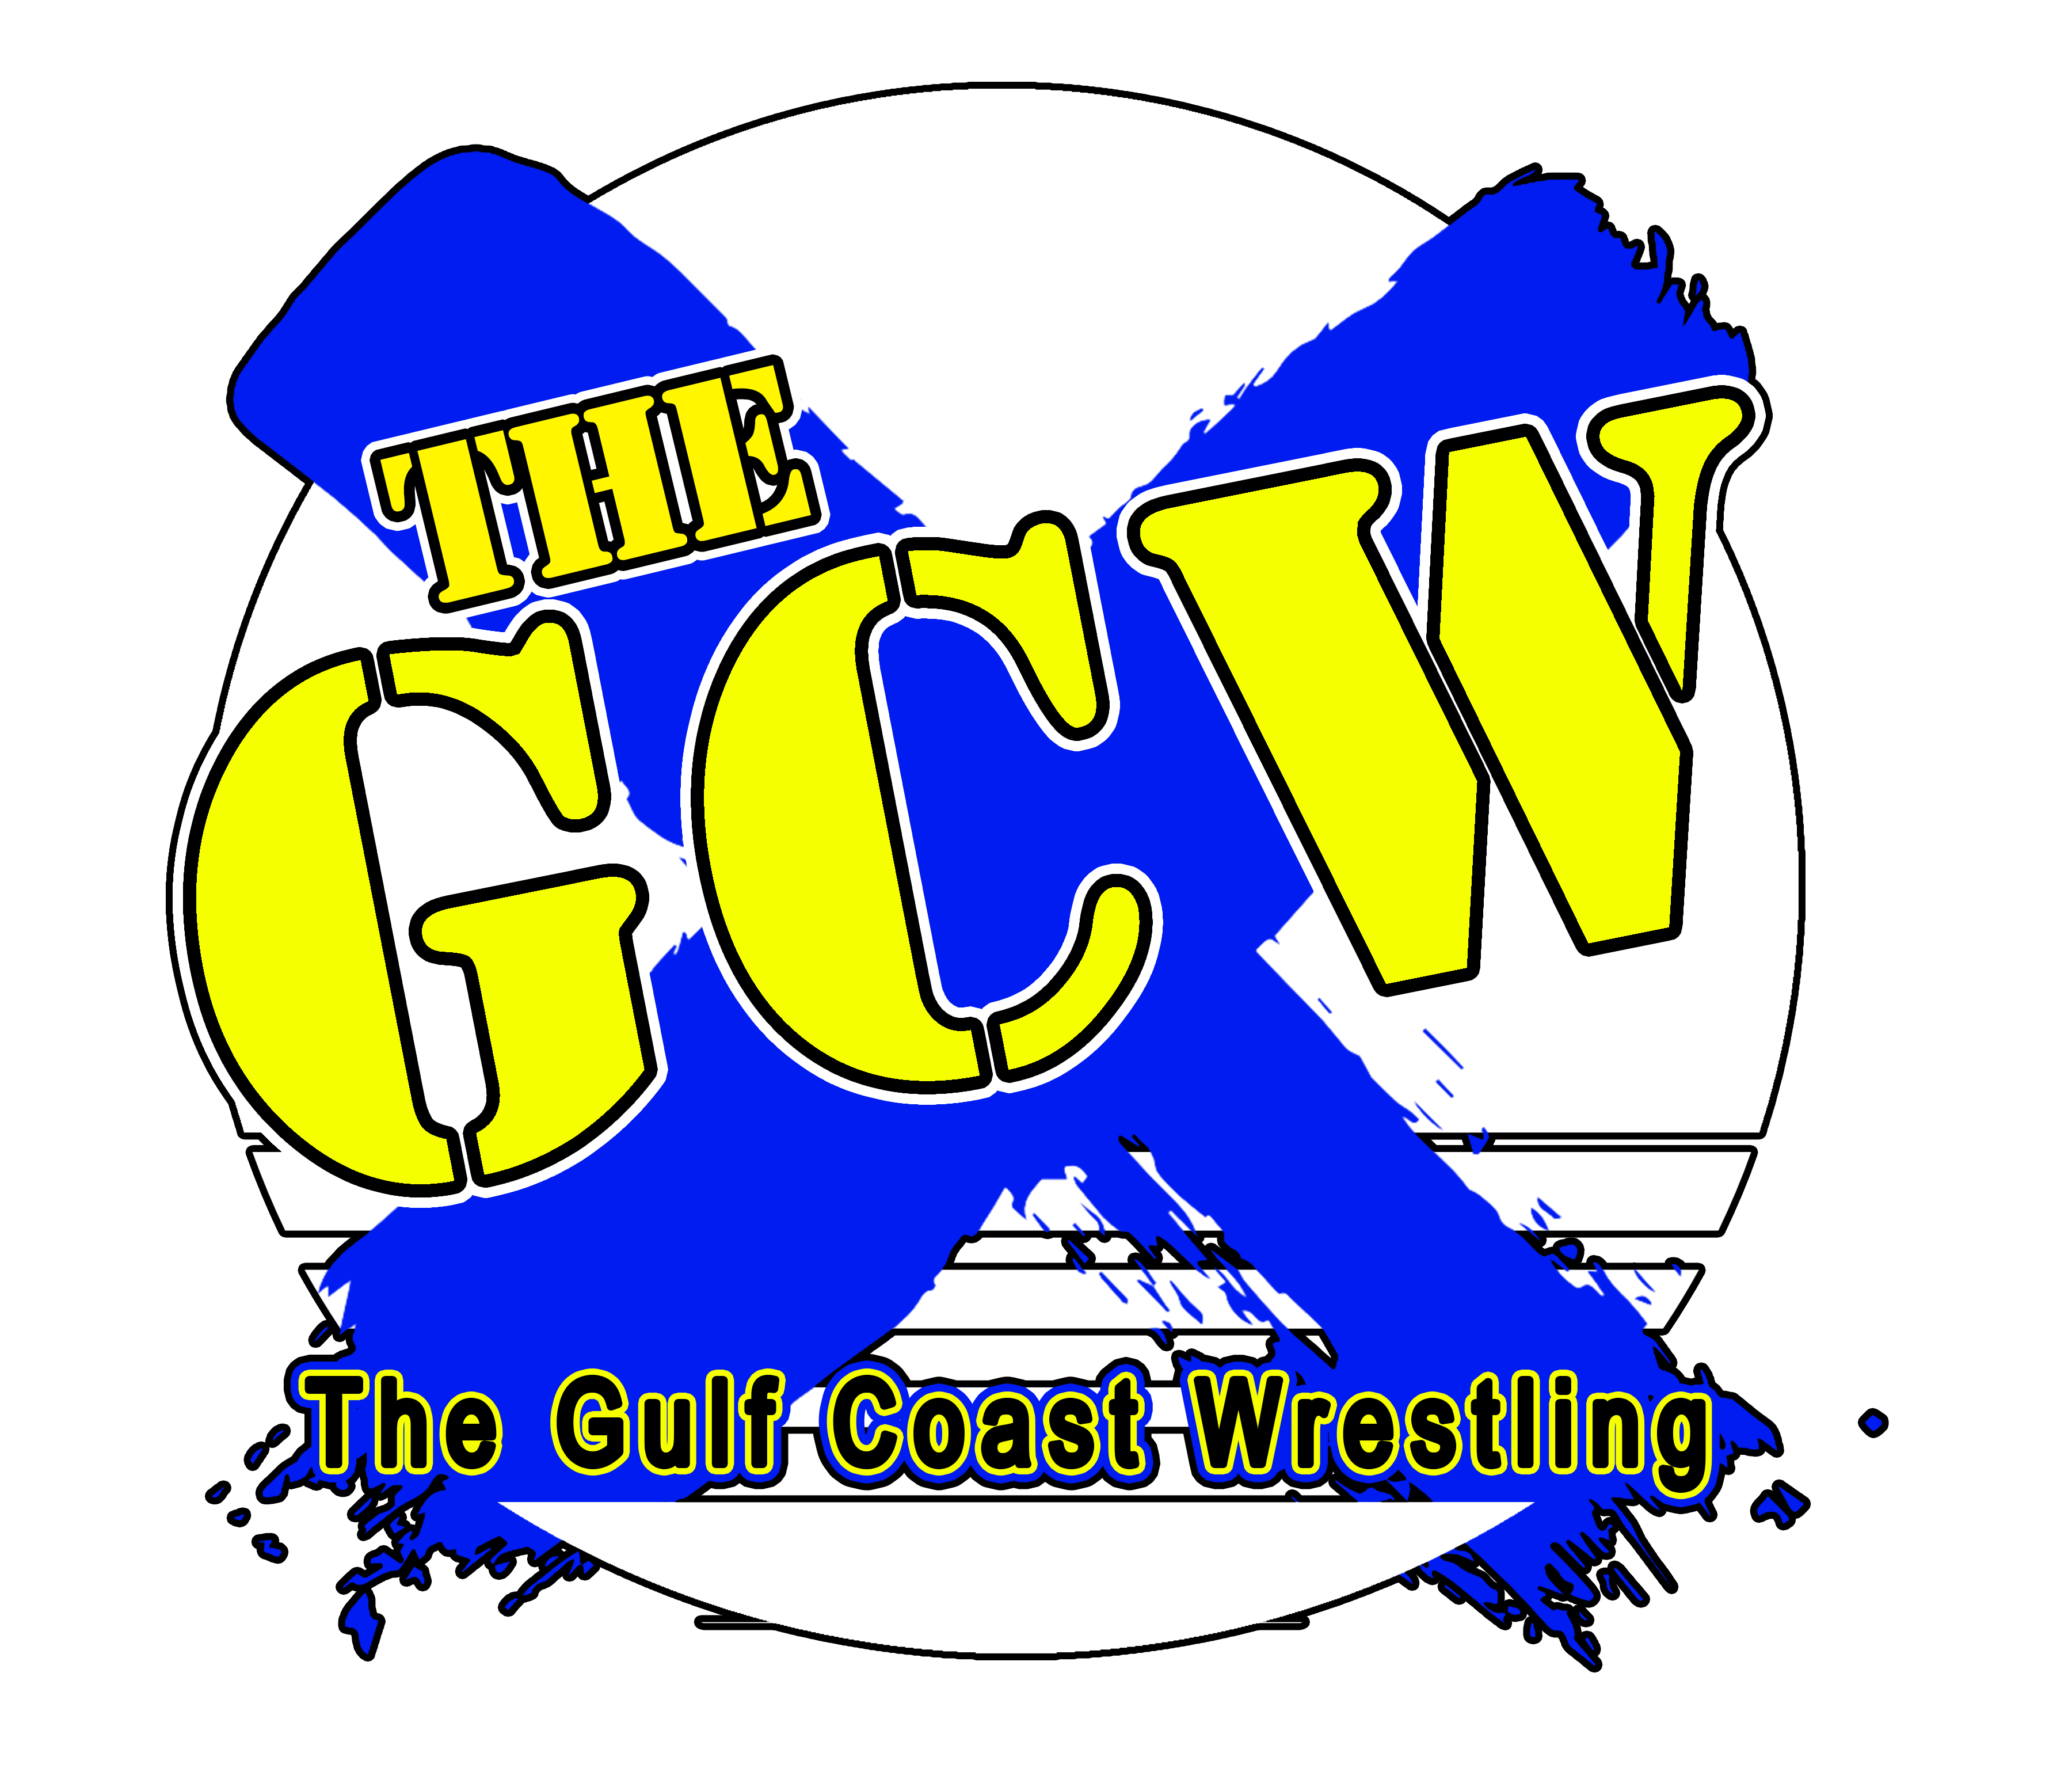 The Gulf Coast Wrestling